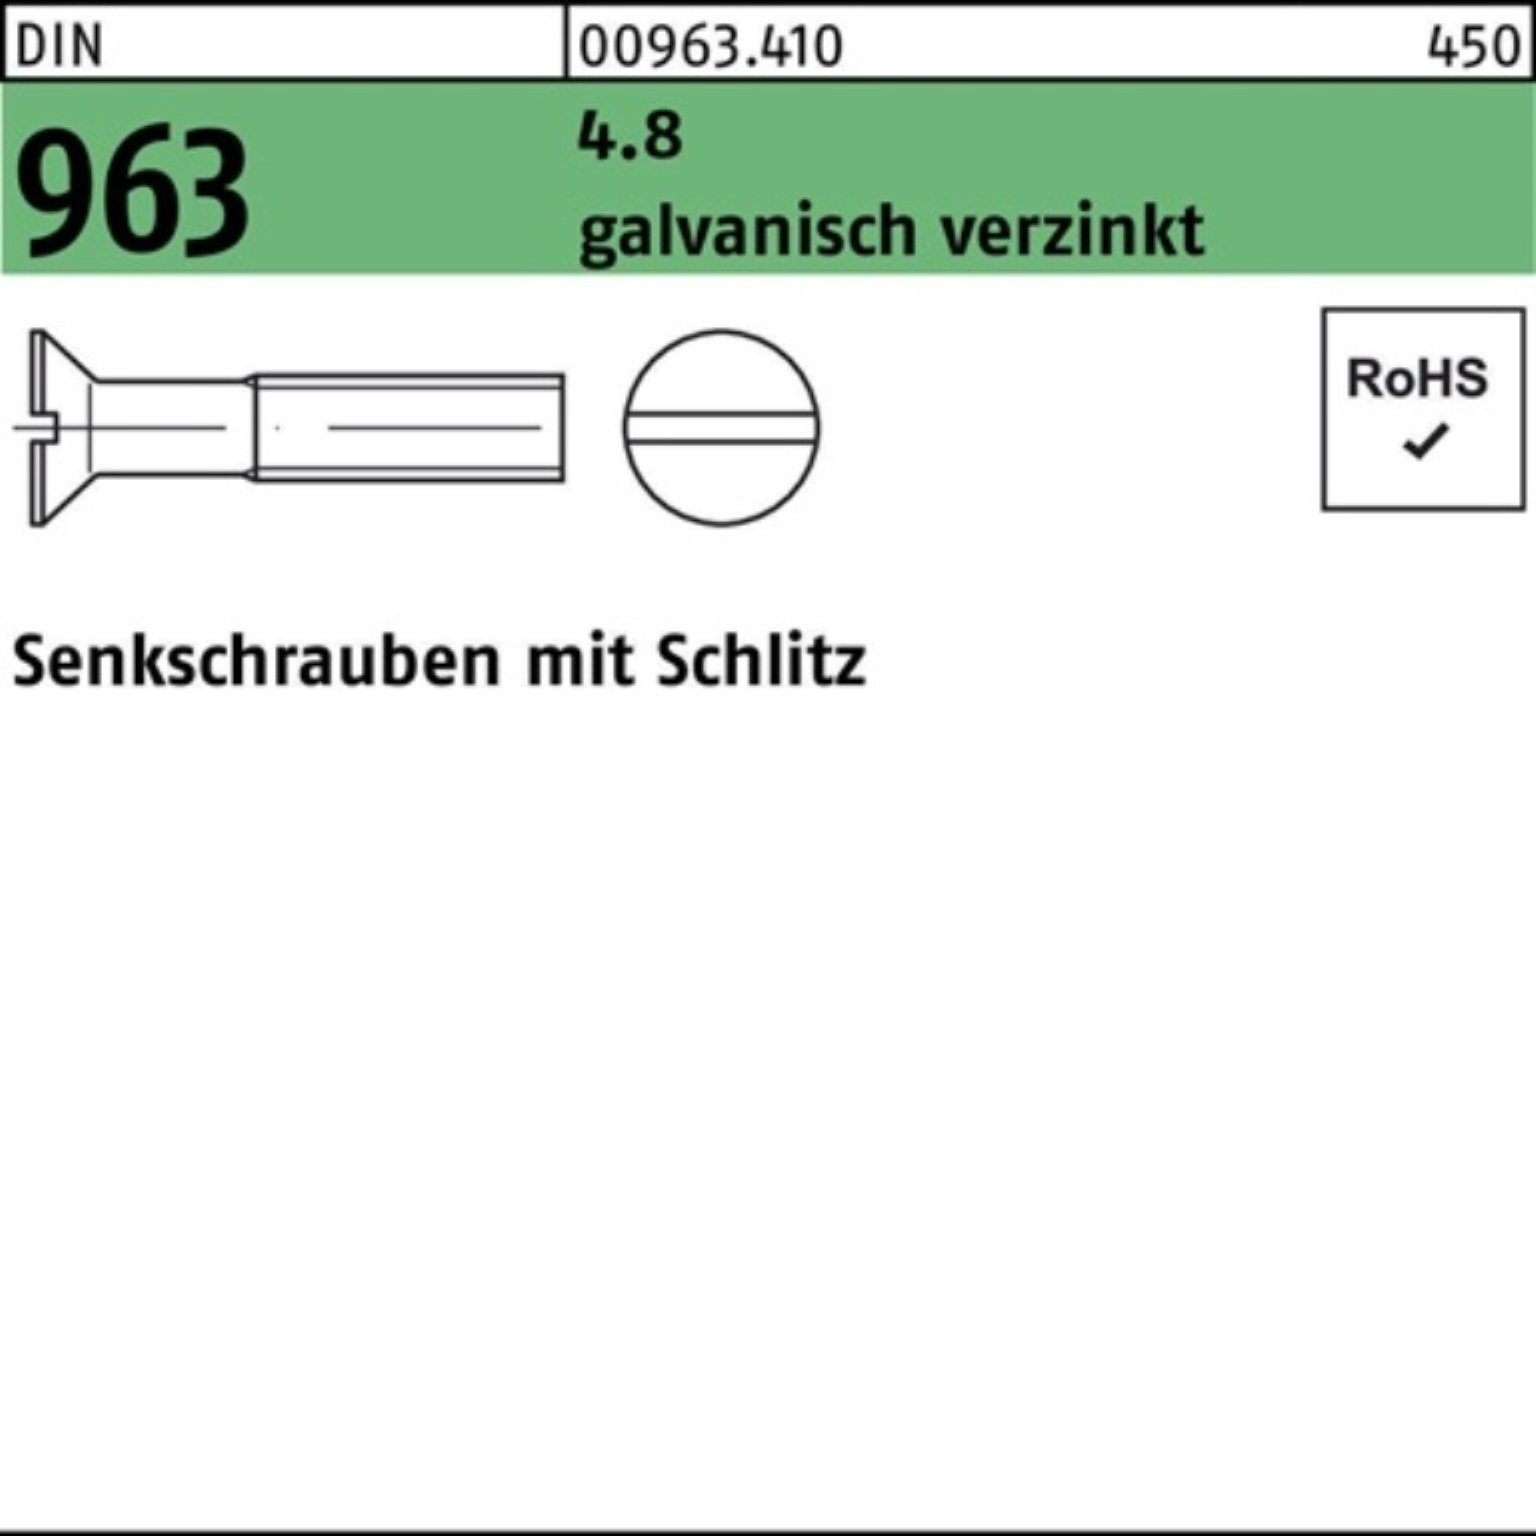 Senkschraube 200 DIN Senkschraube 4.8 Stü Pack 16 galv.verz. M4x Reyher Schlitz 963 200er